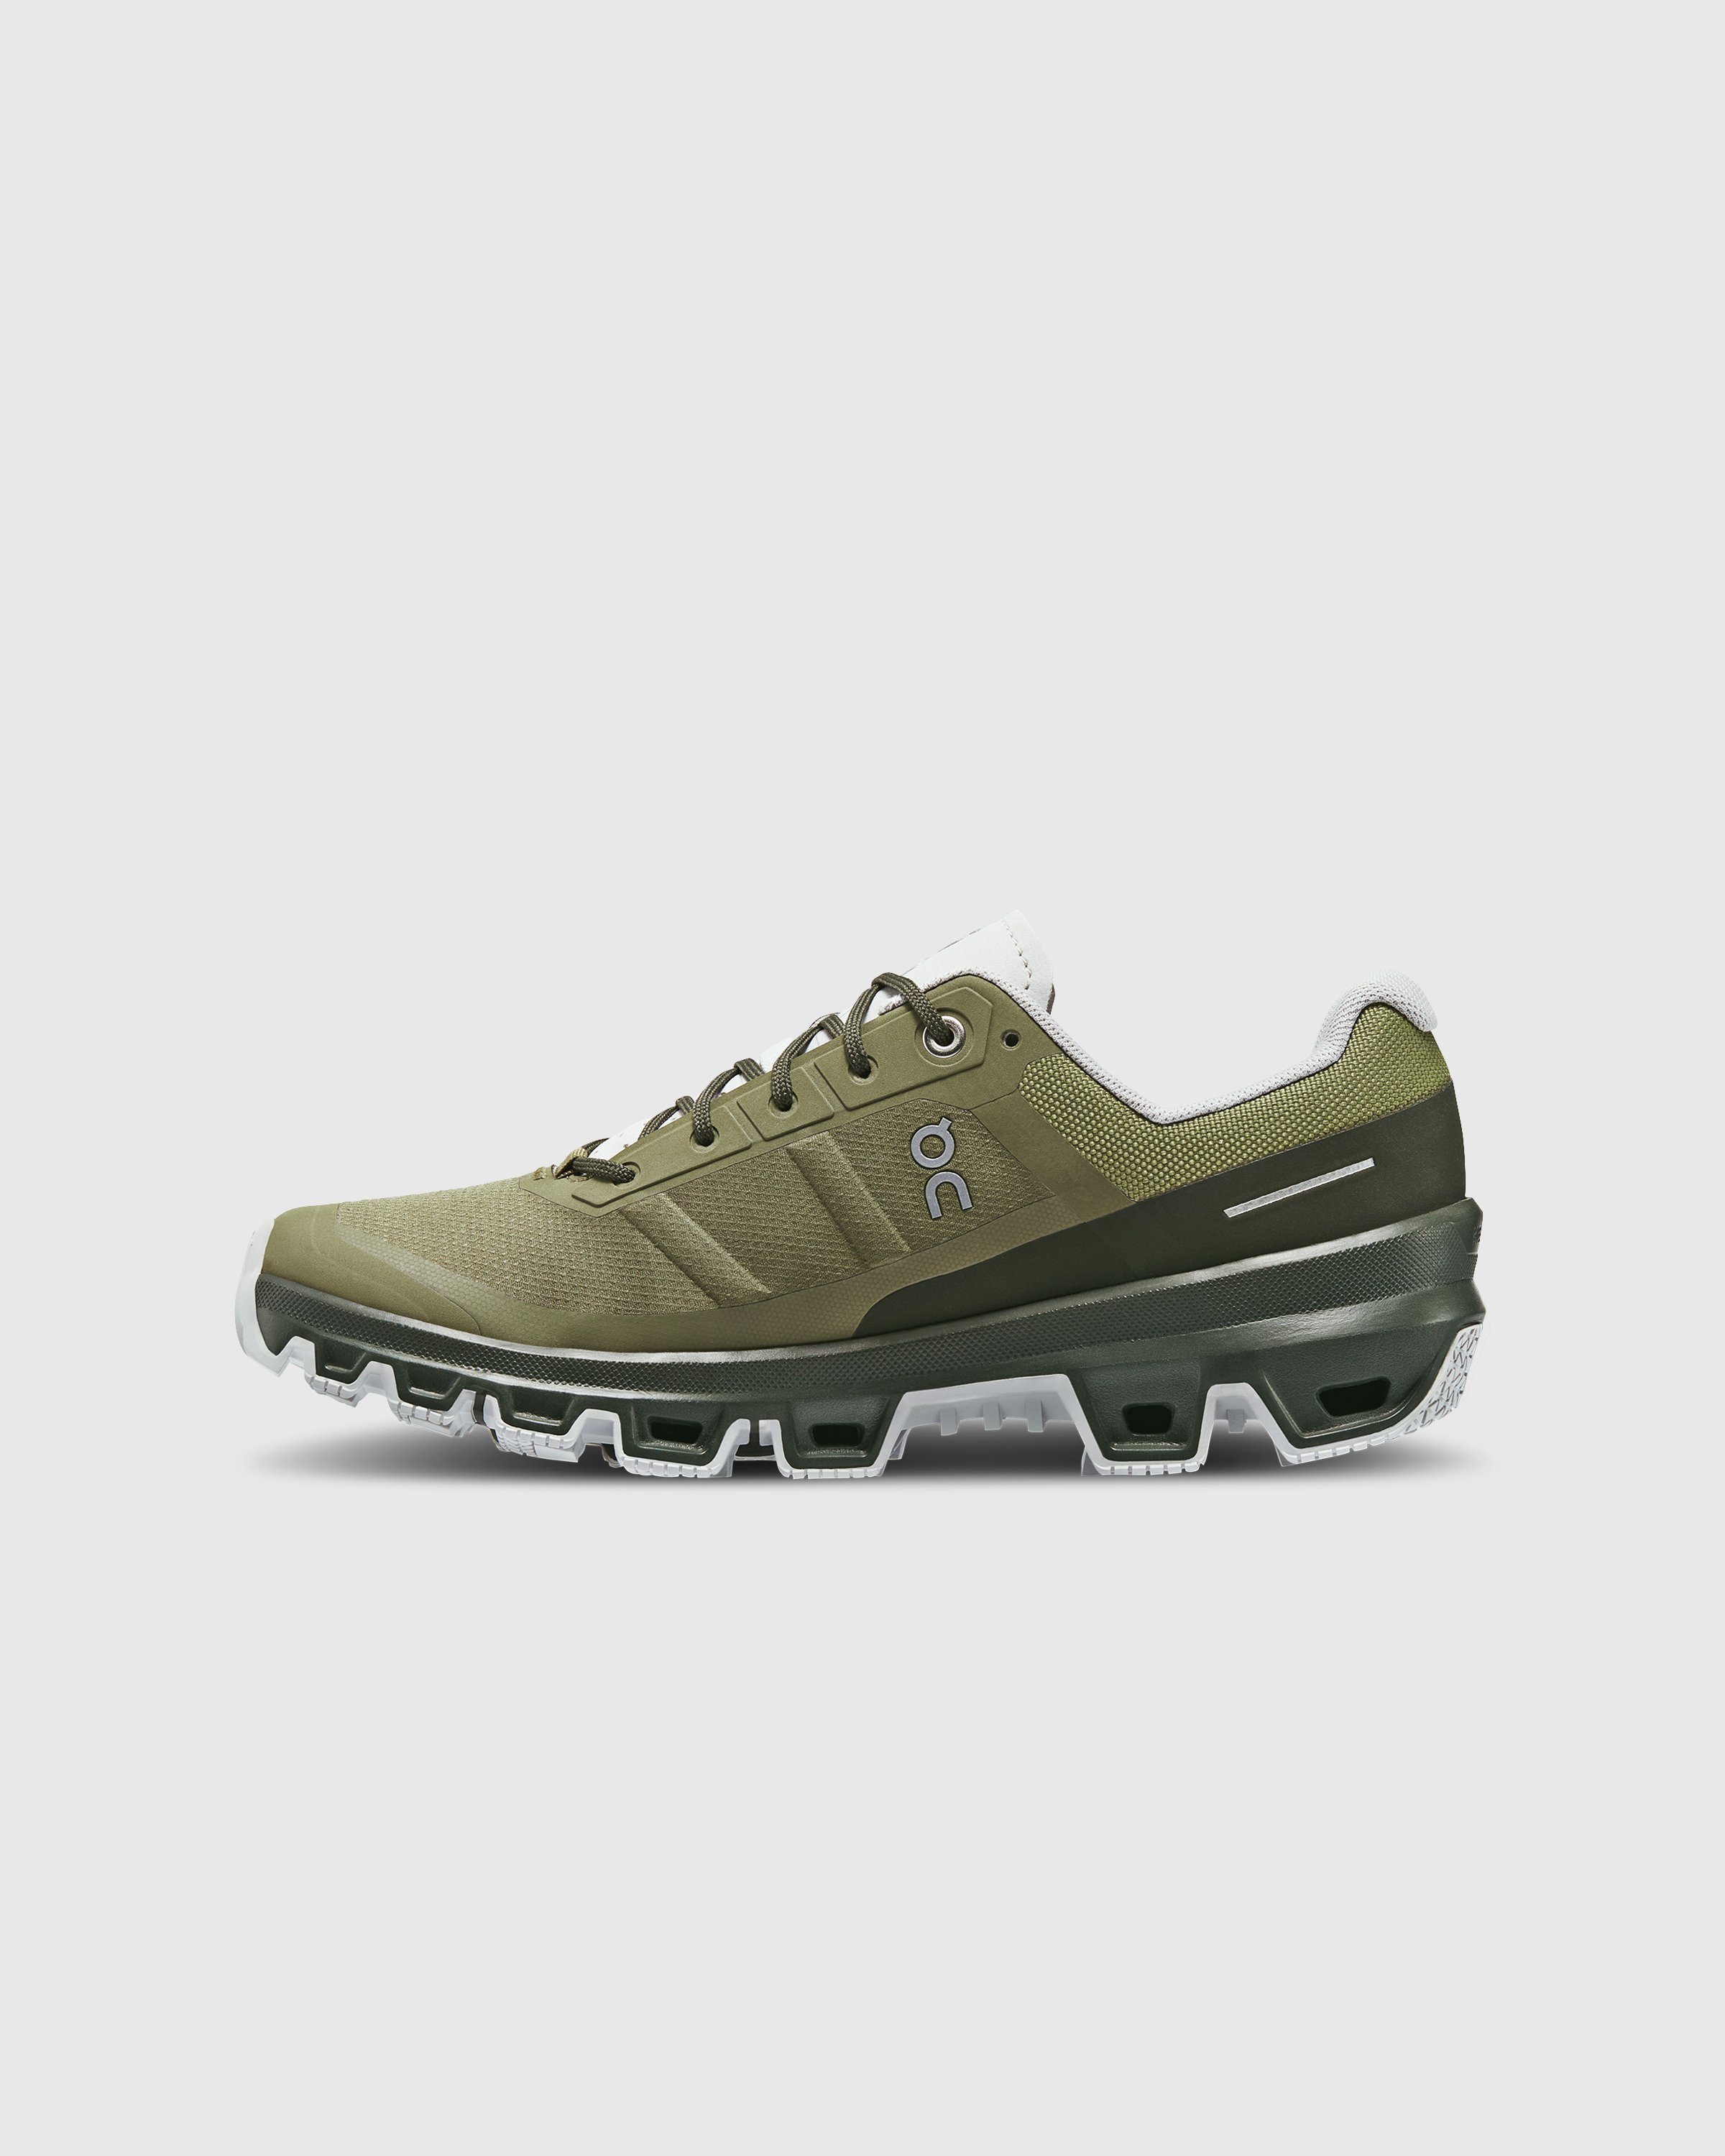 On - Cloudventure Olive/Fir - Footwear - Green - Image 2